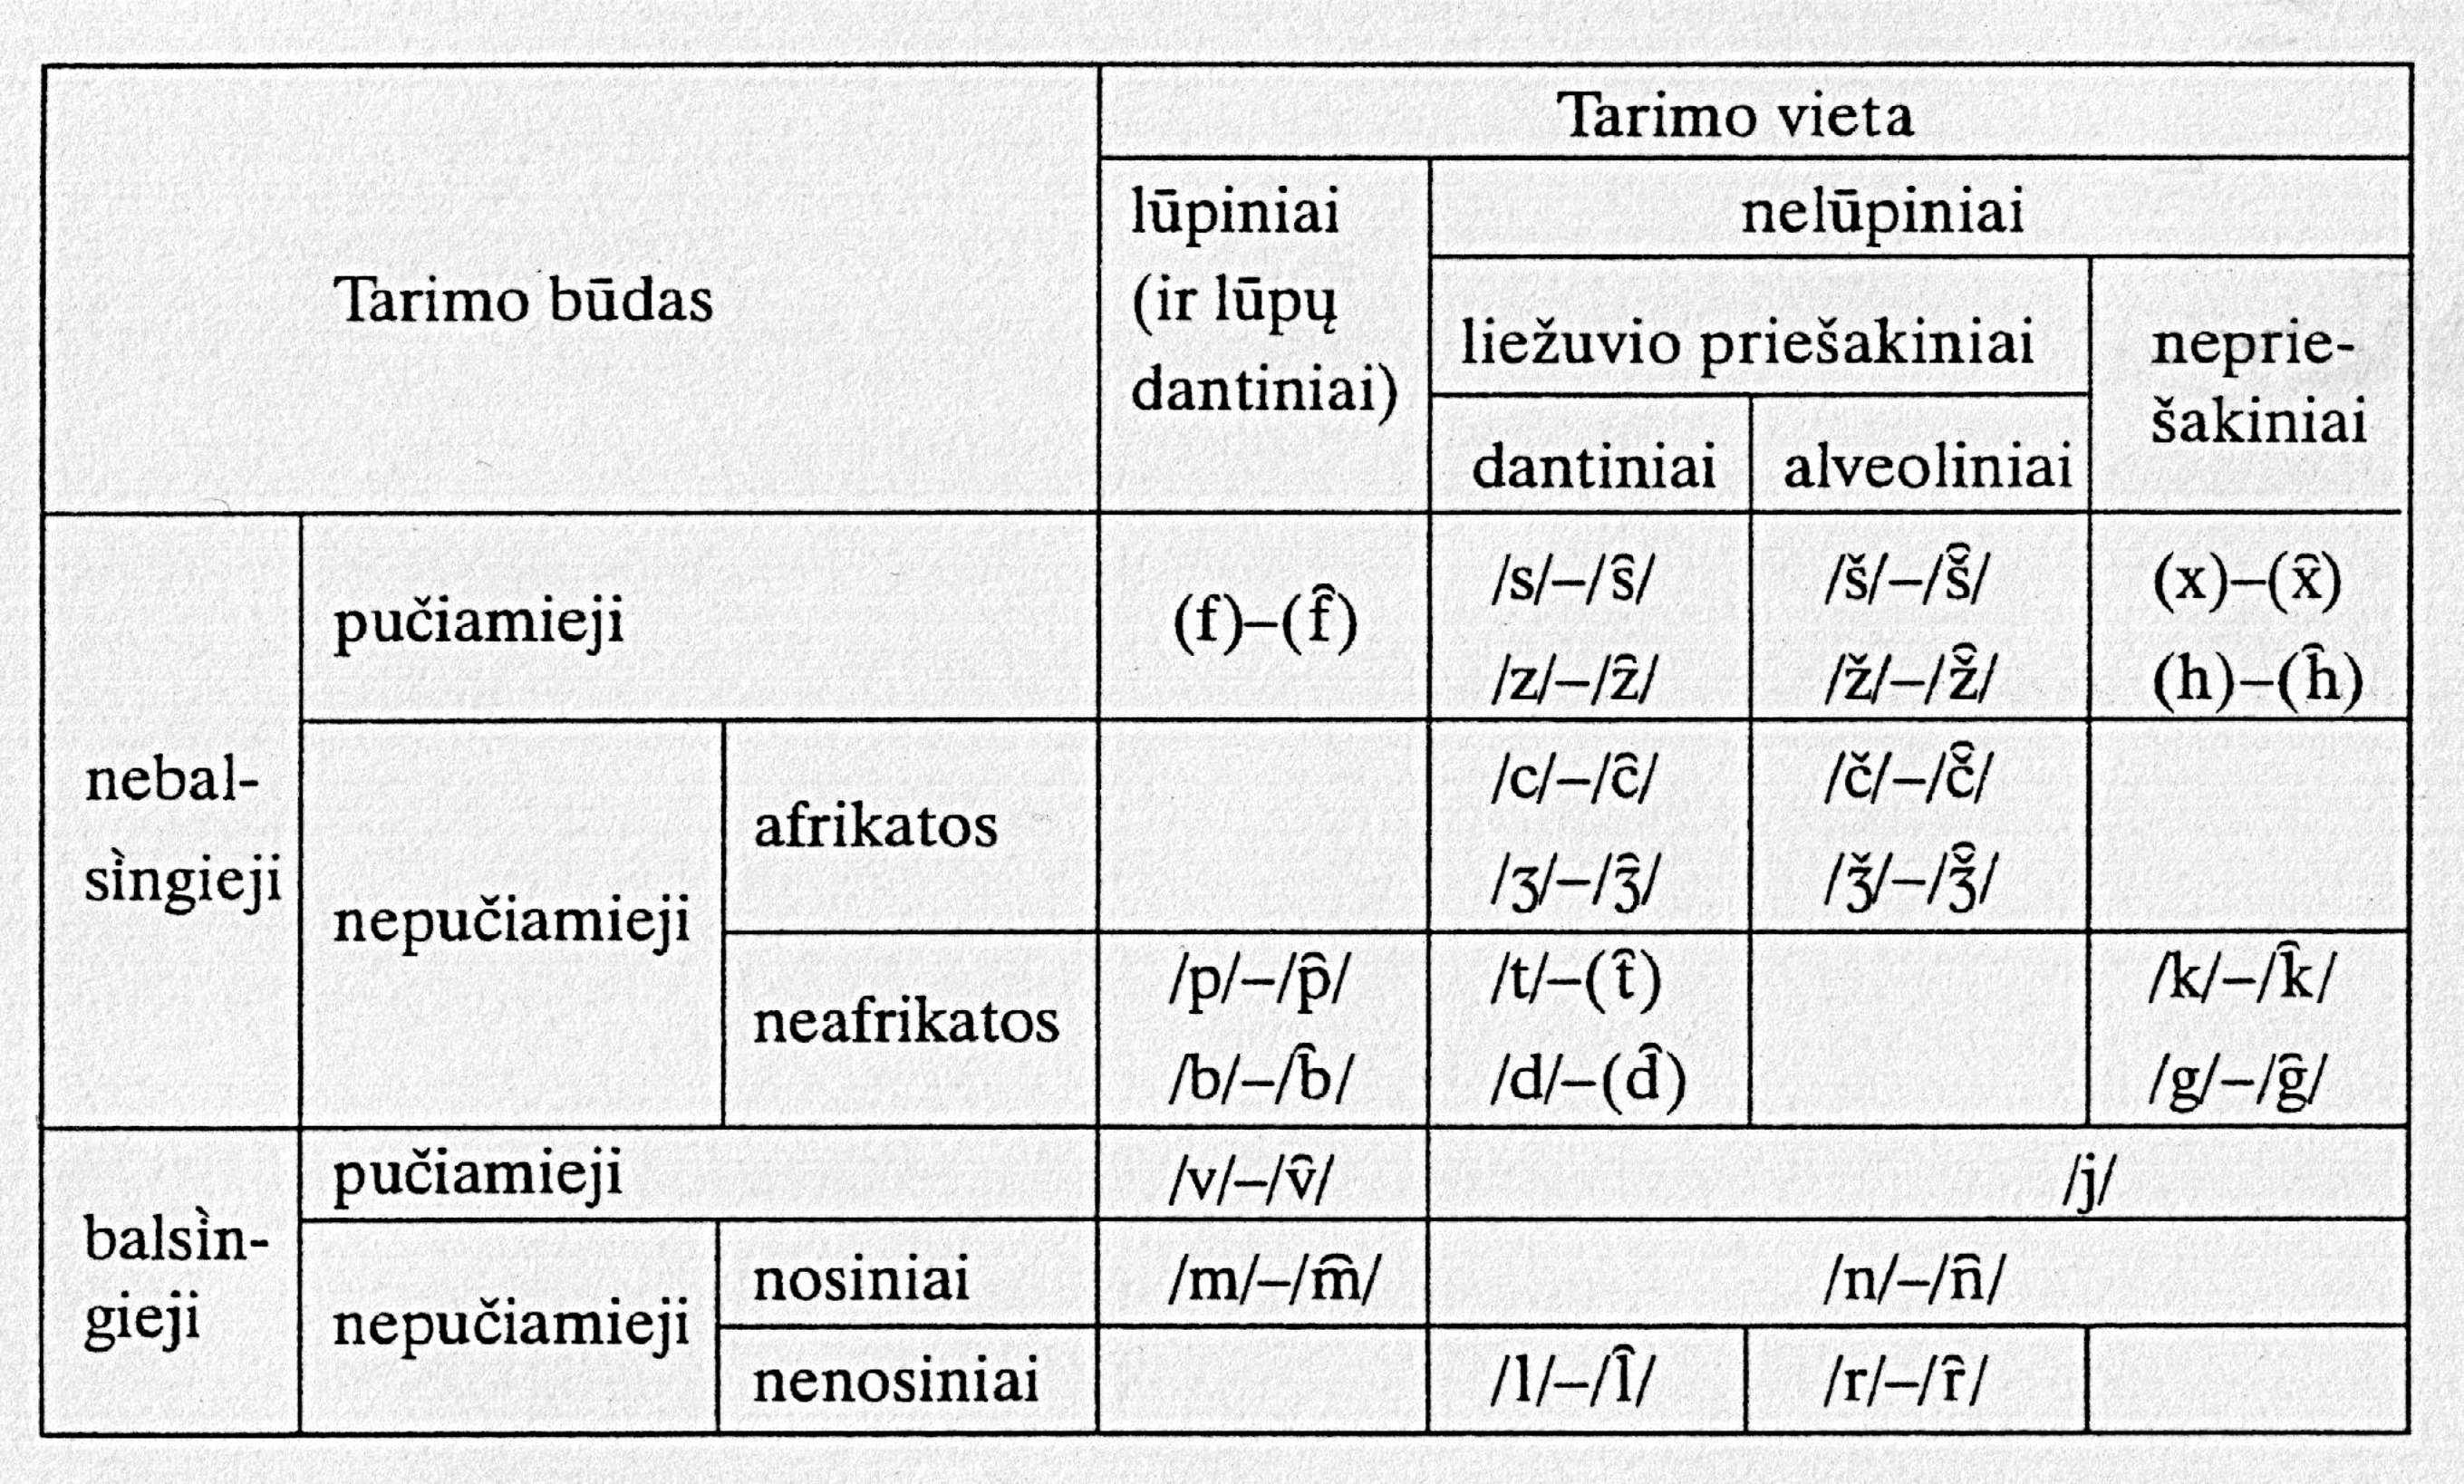 Lietuviu kalbos garsai lentele